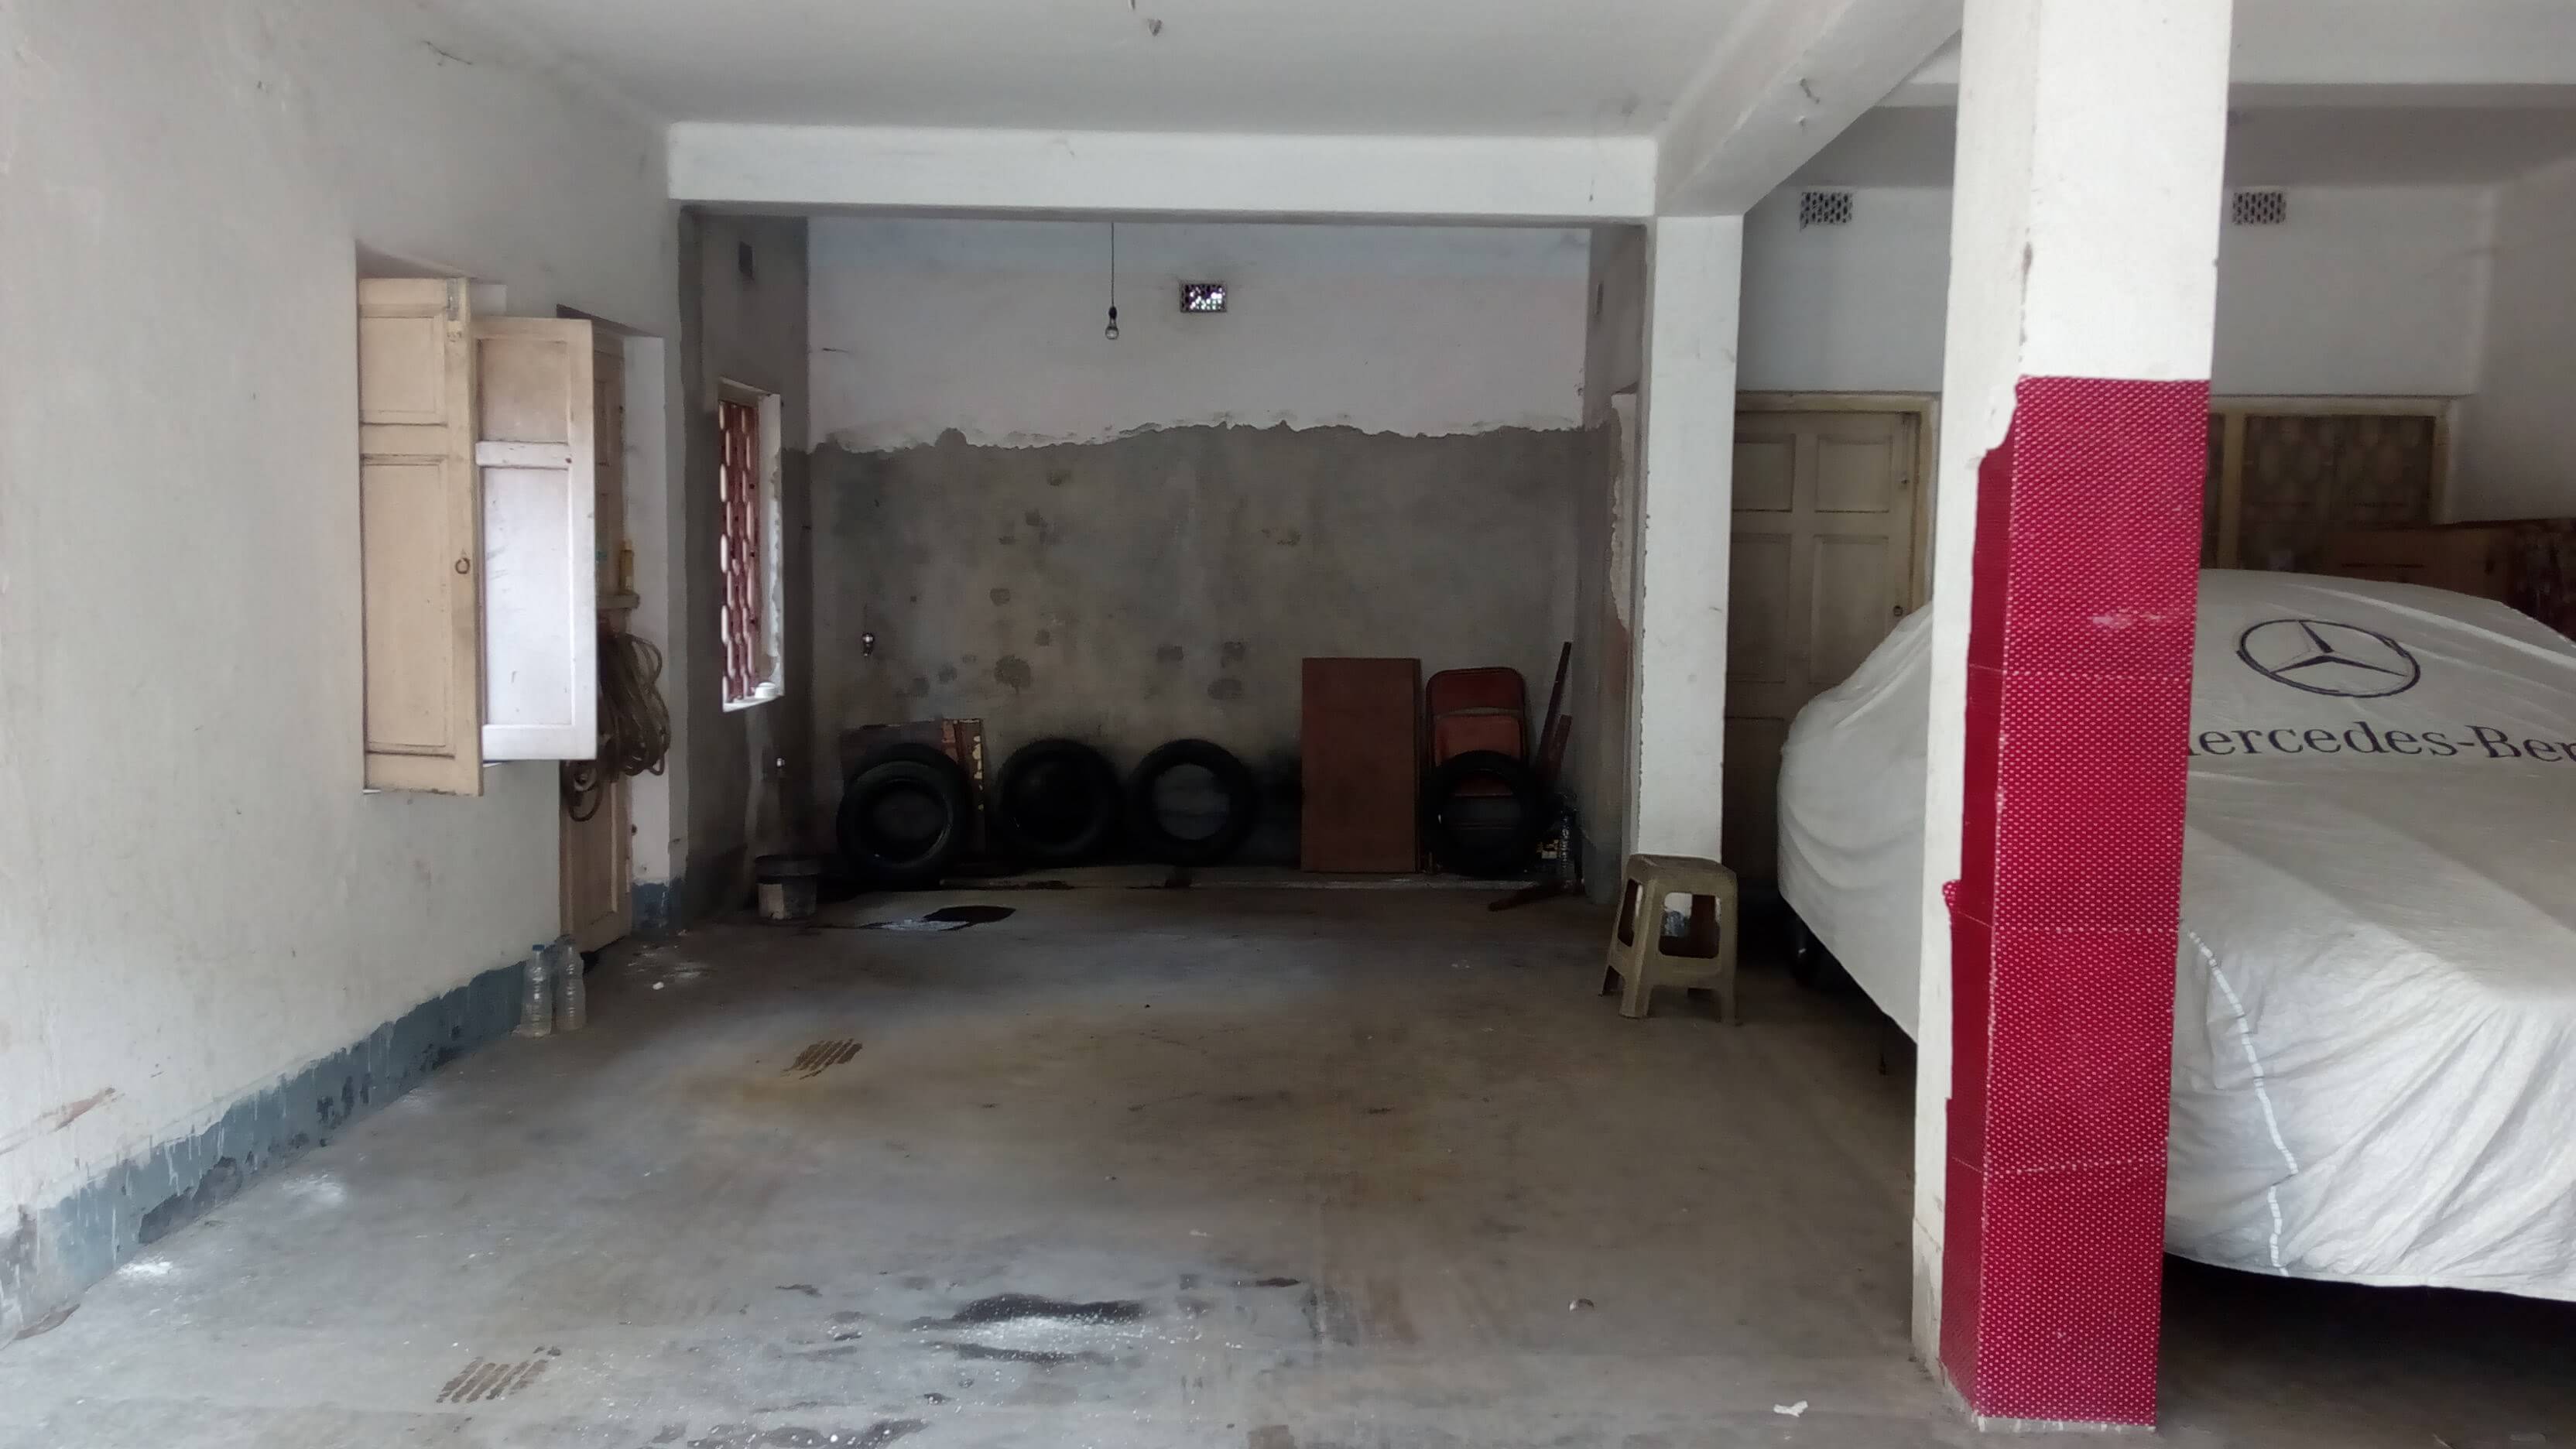 Showroom For Rent in Baguihati,Kolkata (Id:19657)